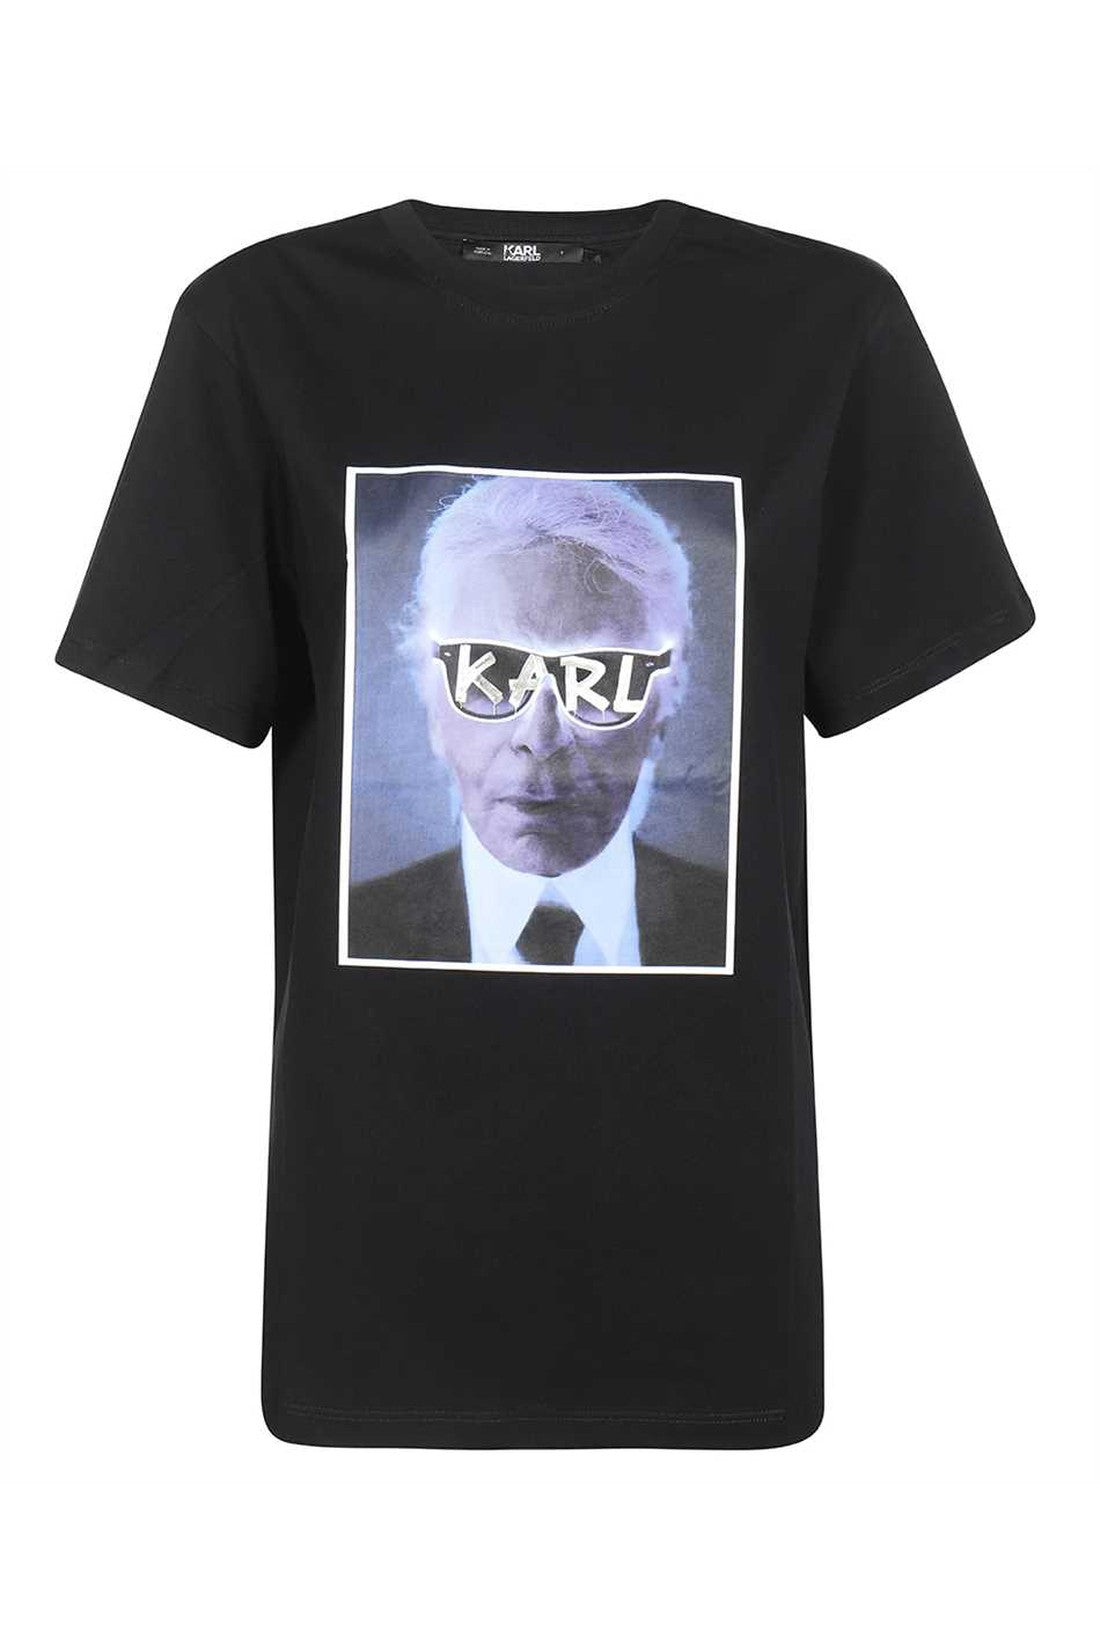 Printed cotton T-shirt-Karl Lagerfeld-OUTLET-SALE-L-ARCHIVIST